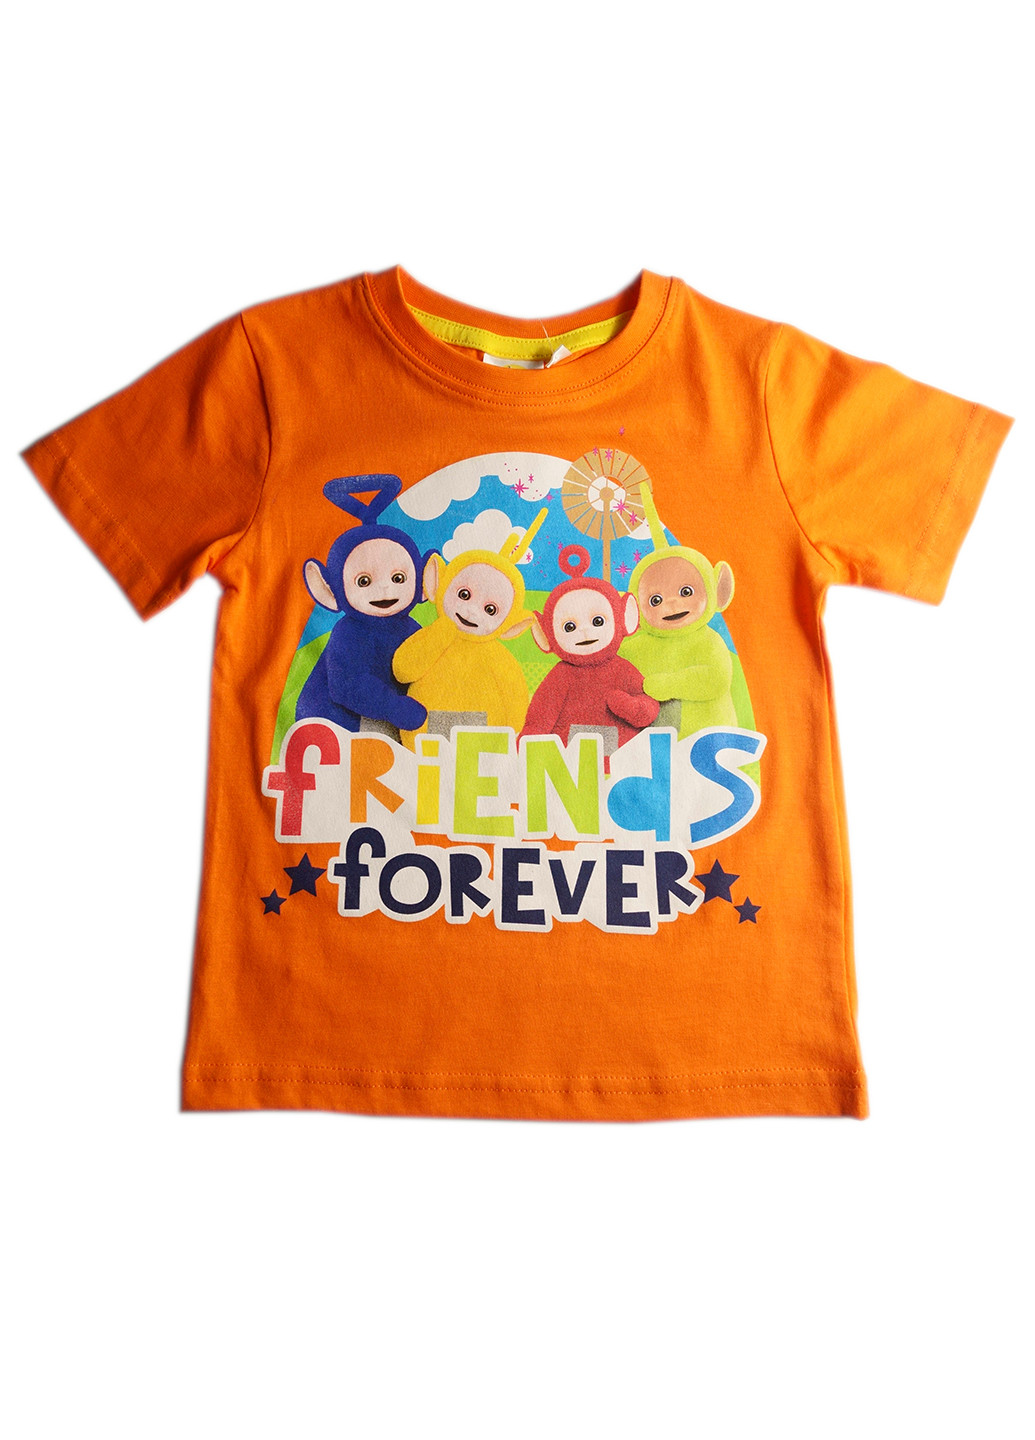 Оранжевая летняя футболка с коротким рукавом Teletubbies